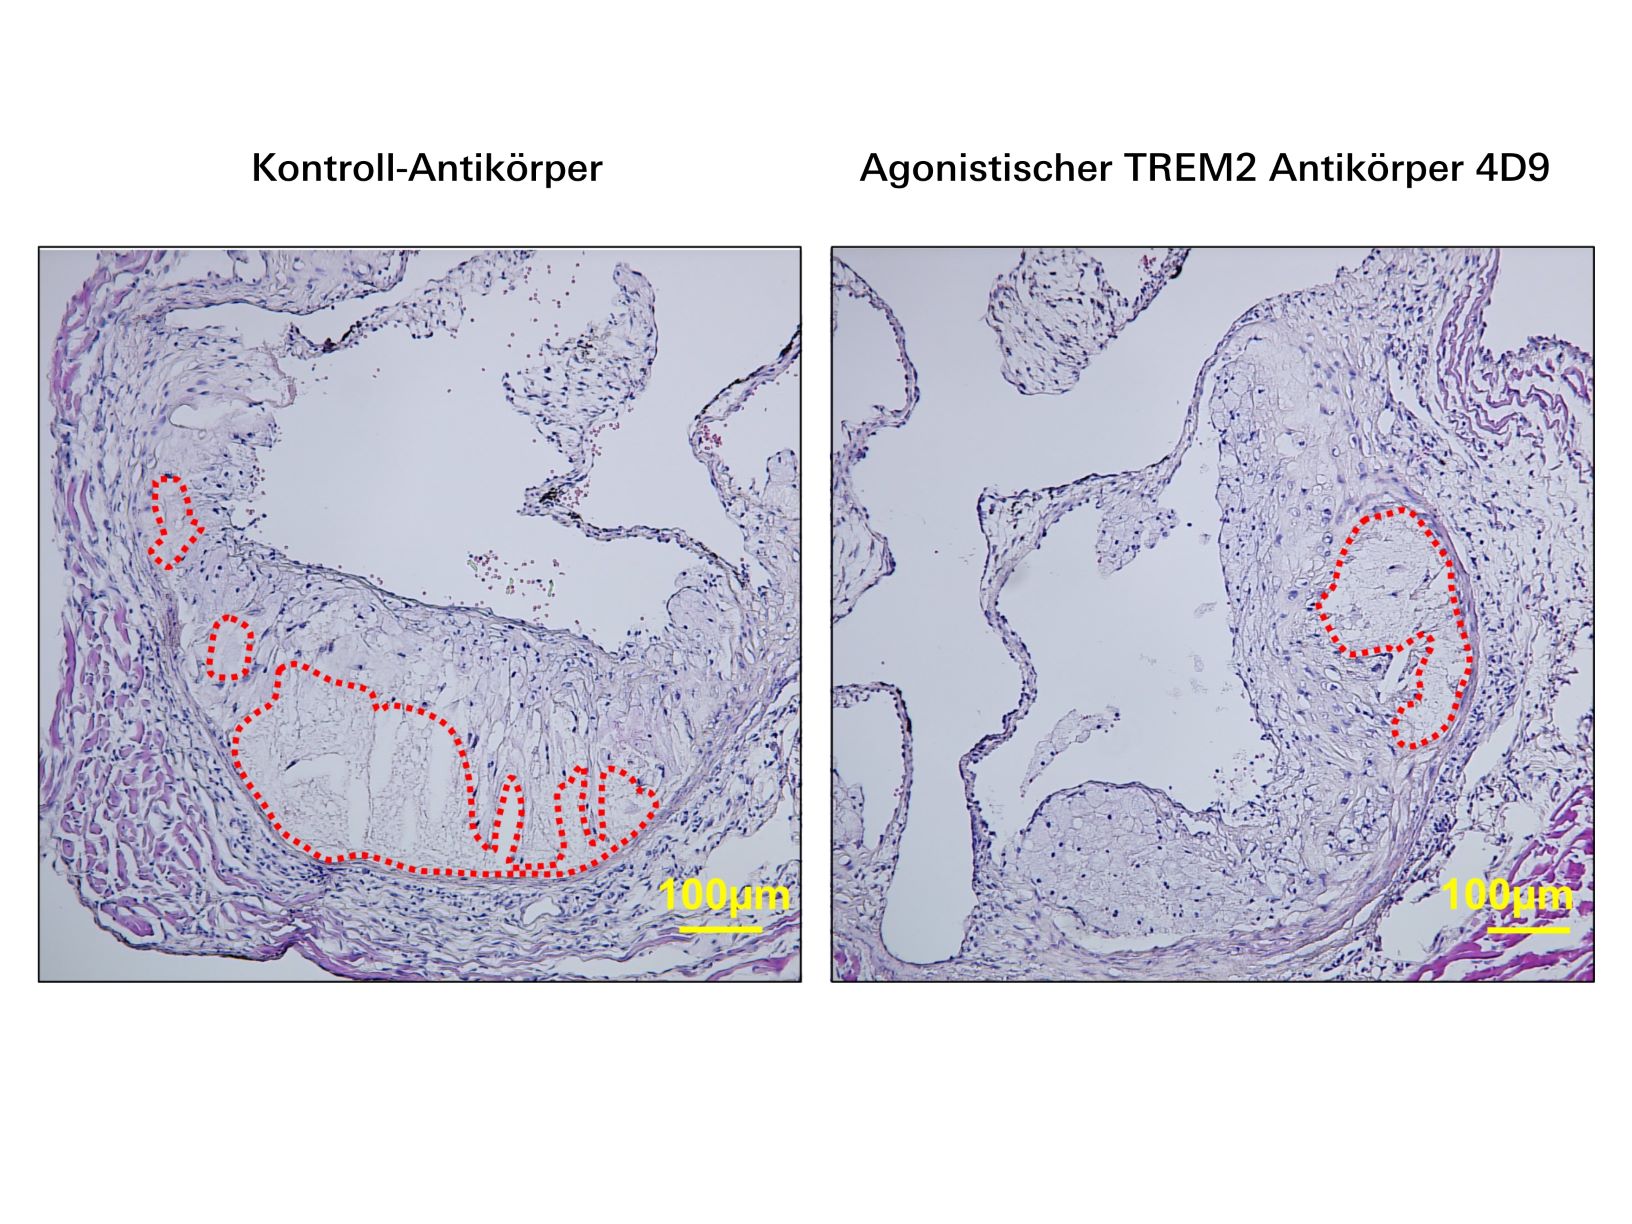 Agonistischer TREM2-Antikörper mit atheroprotektiver Funktion